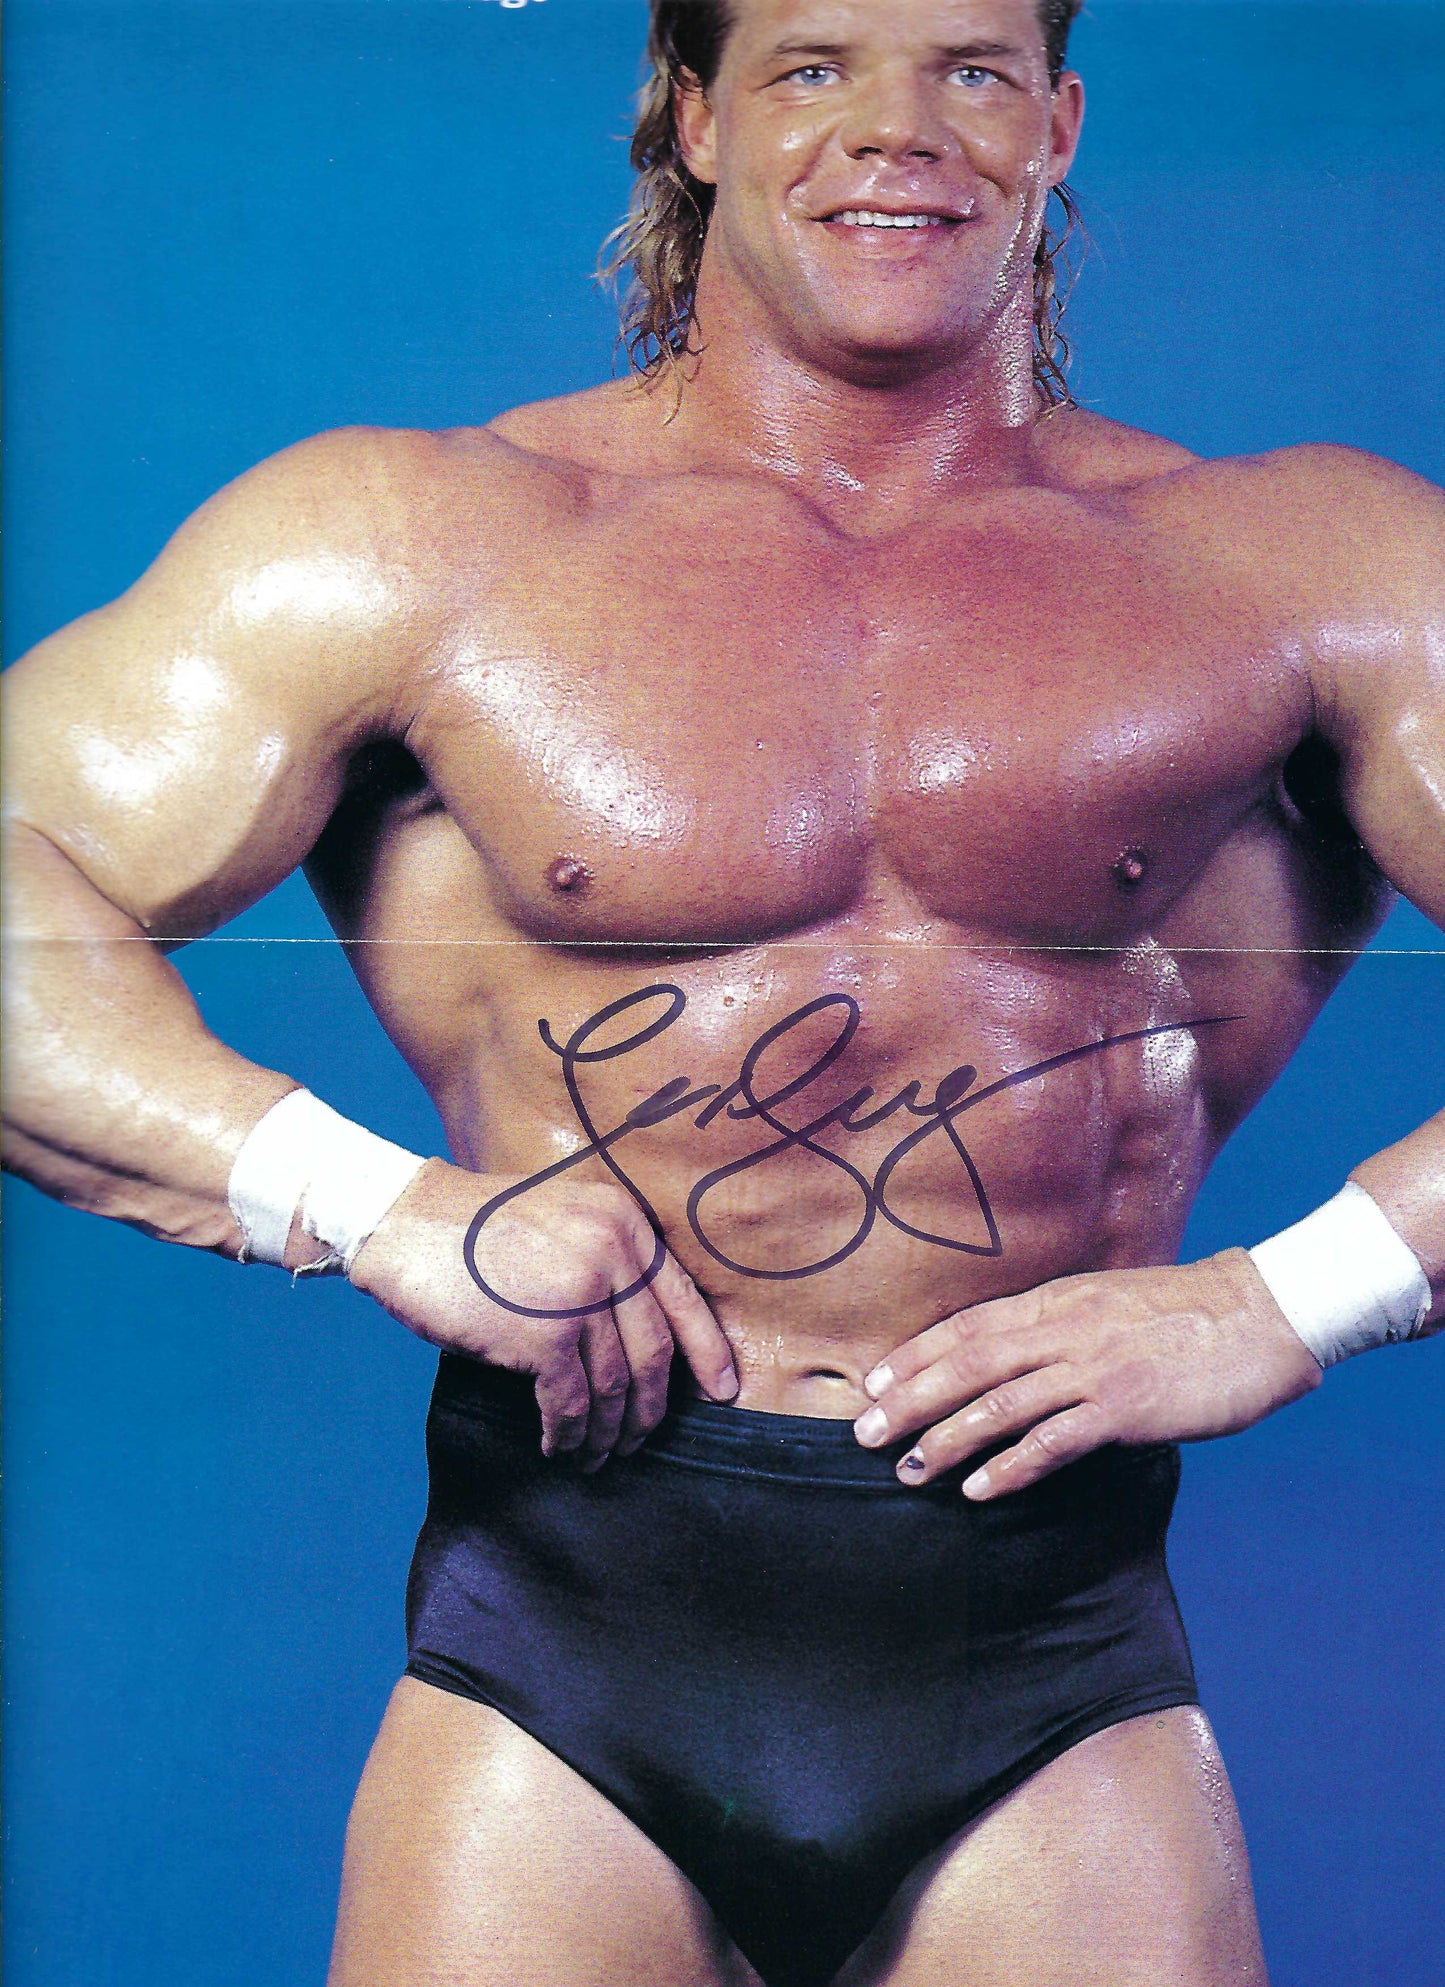 BD286  Sid Justice  Lex Luger   Autographed Vintage Wrestling Magazine w/COA